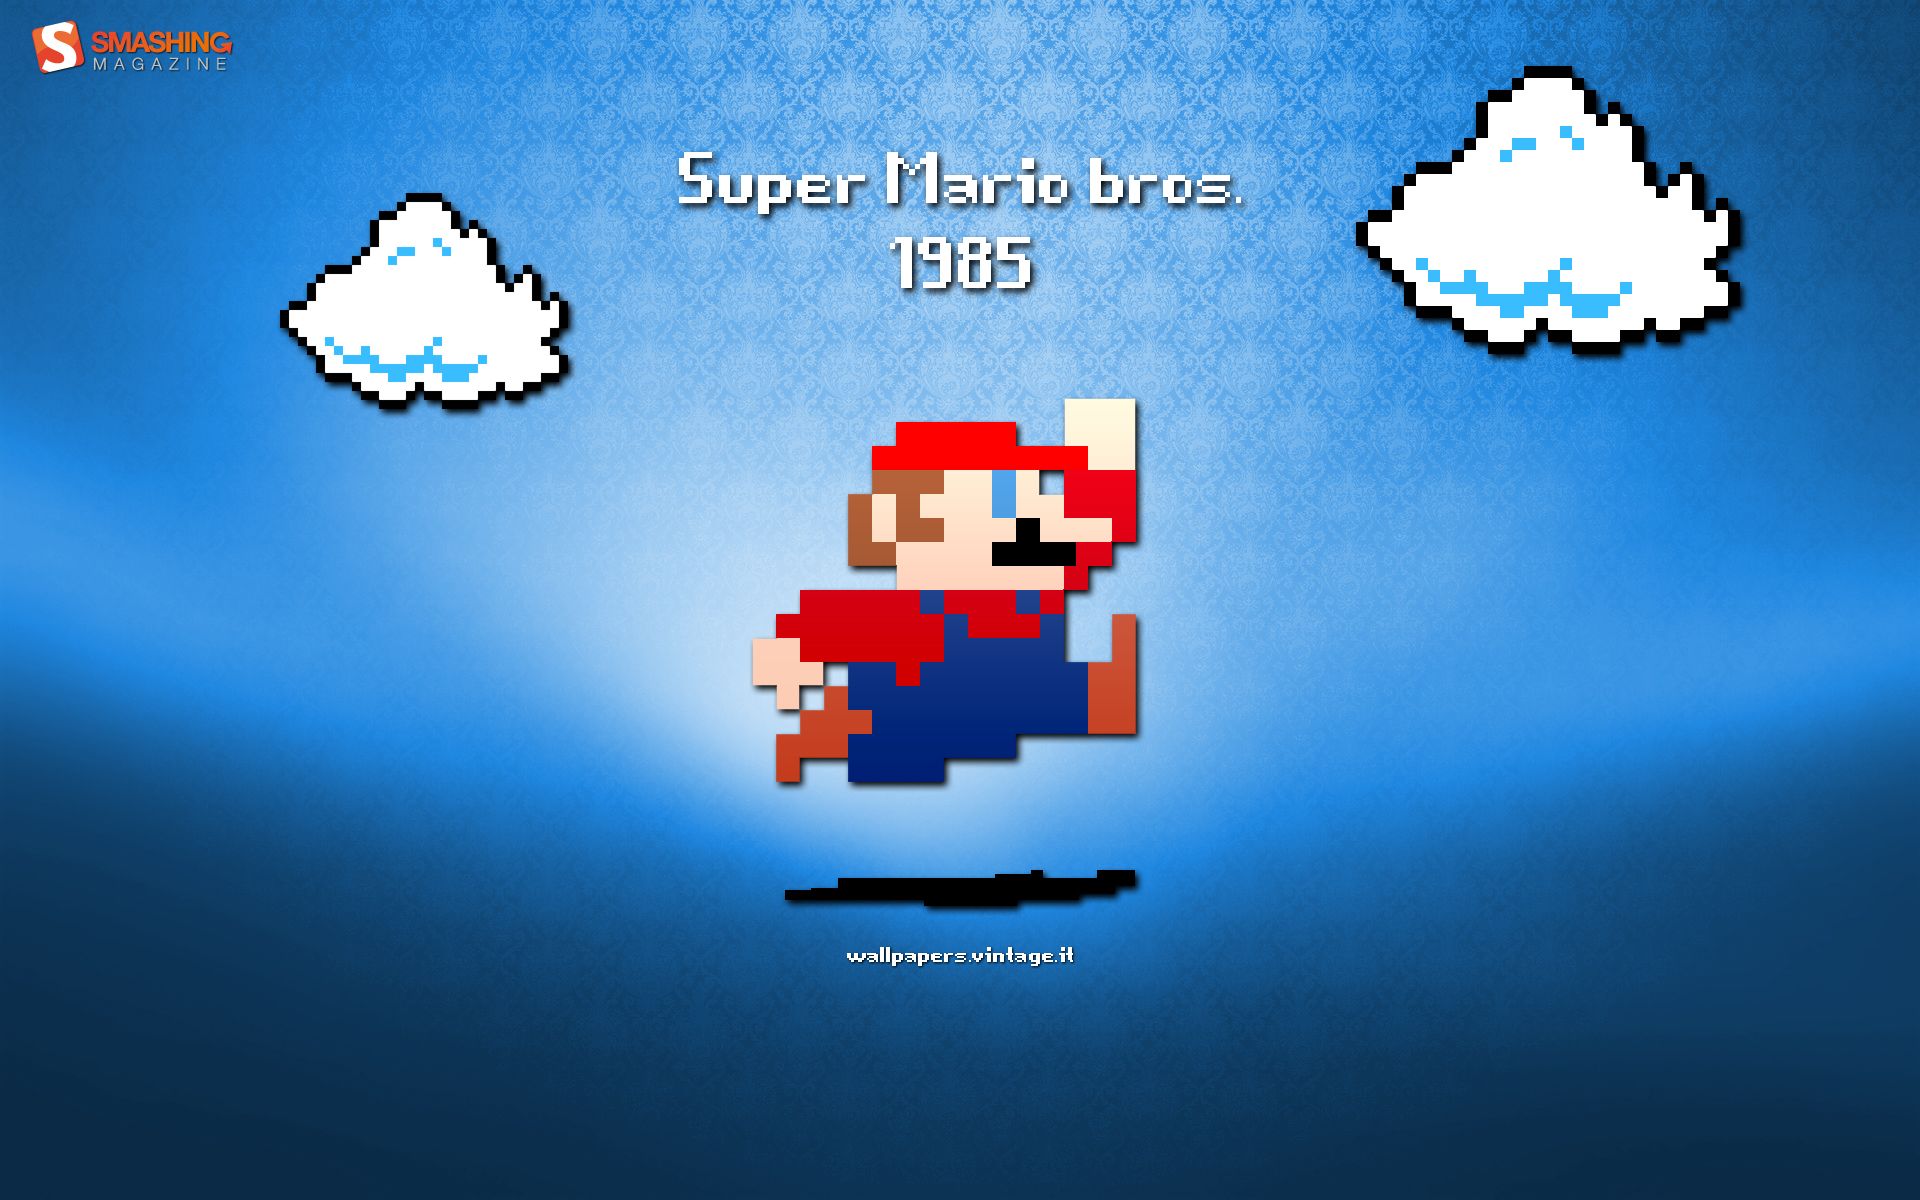 Super Mario bros. 1985 wallpaper - Free Desktop HD iPad iPhone ...